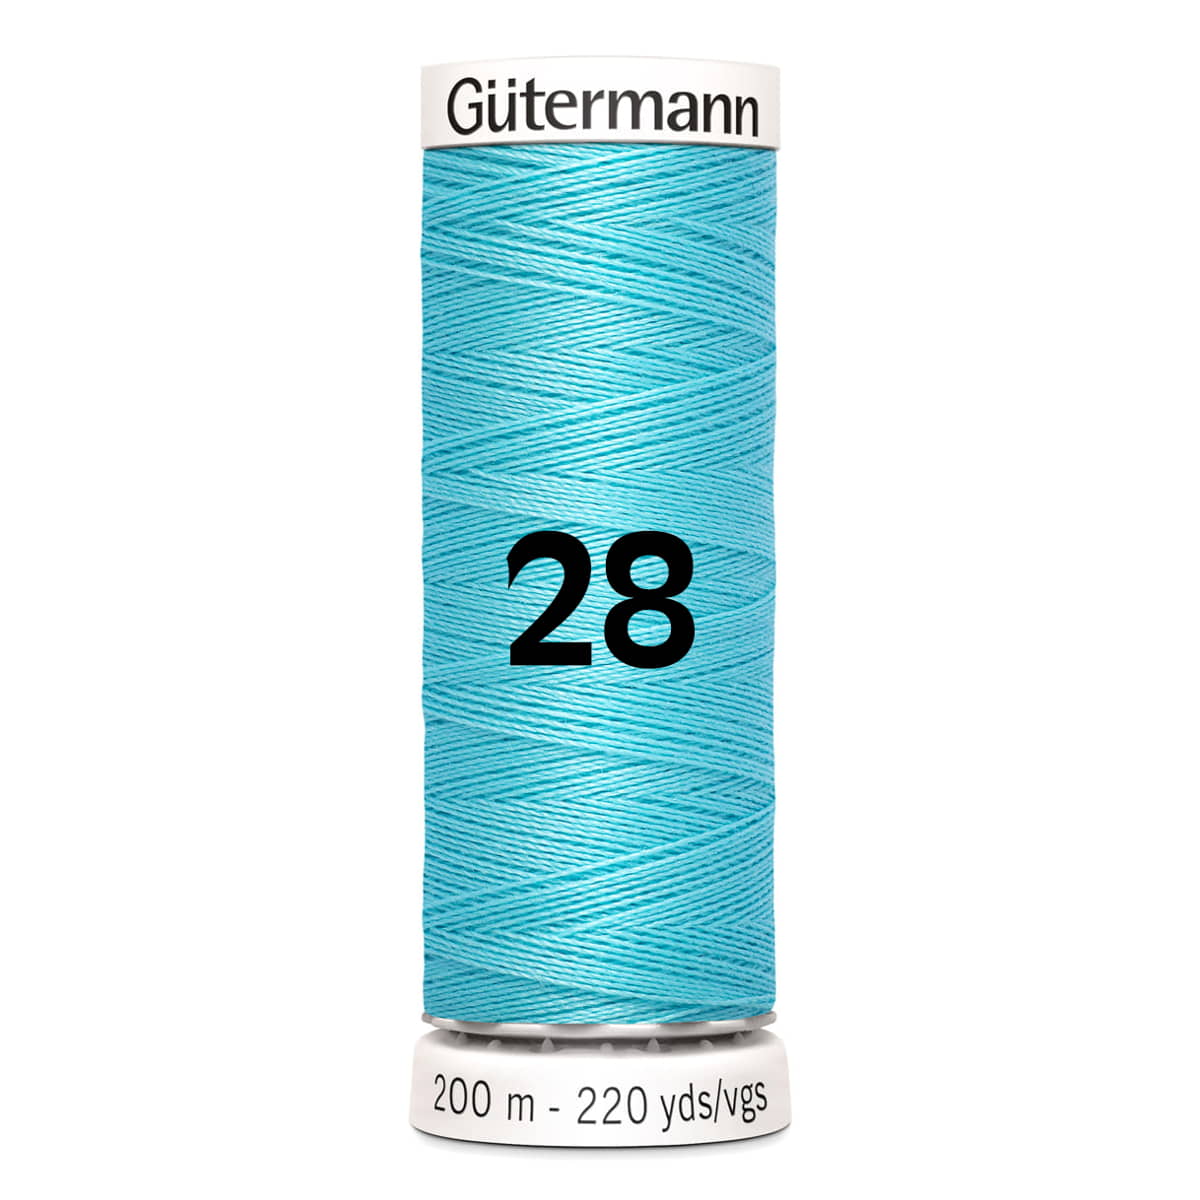 Gutermann garen | 200m | 28 turquoise naaigaren GM-200-28-TURQUOISE - Fourniturenkraam.nl